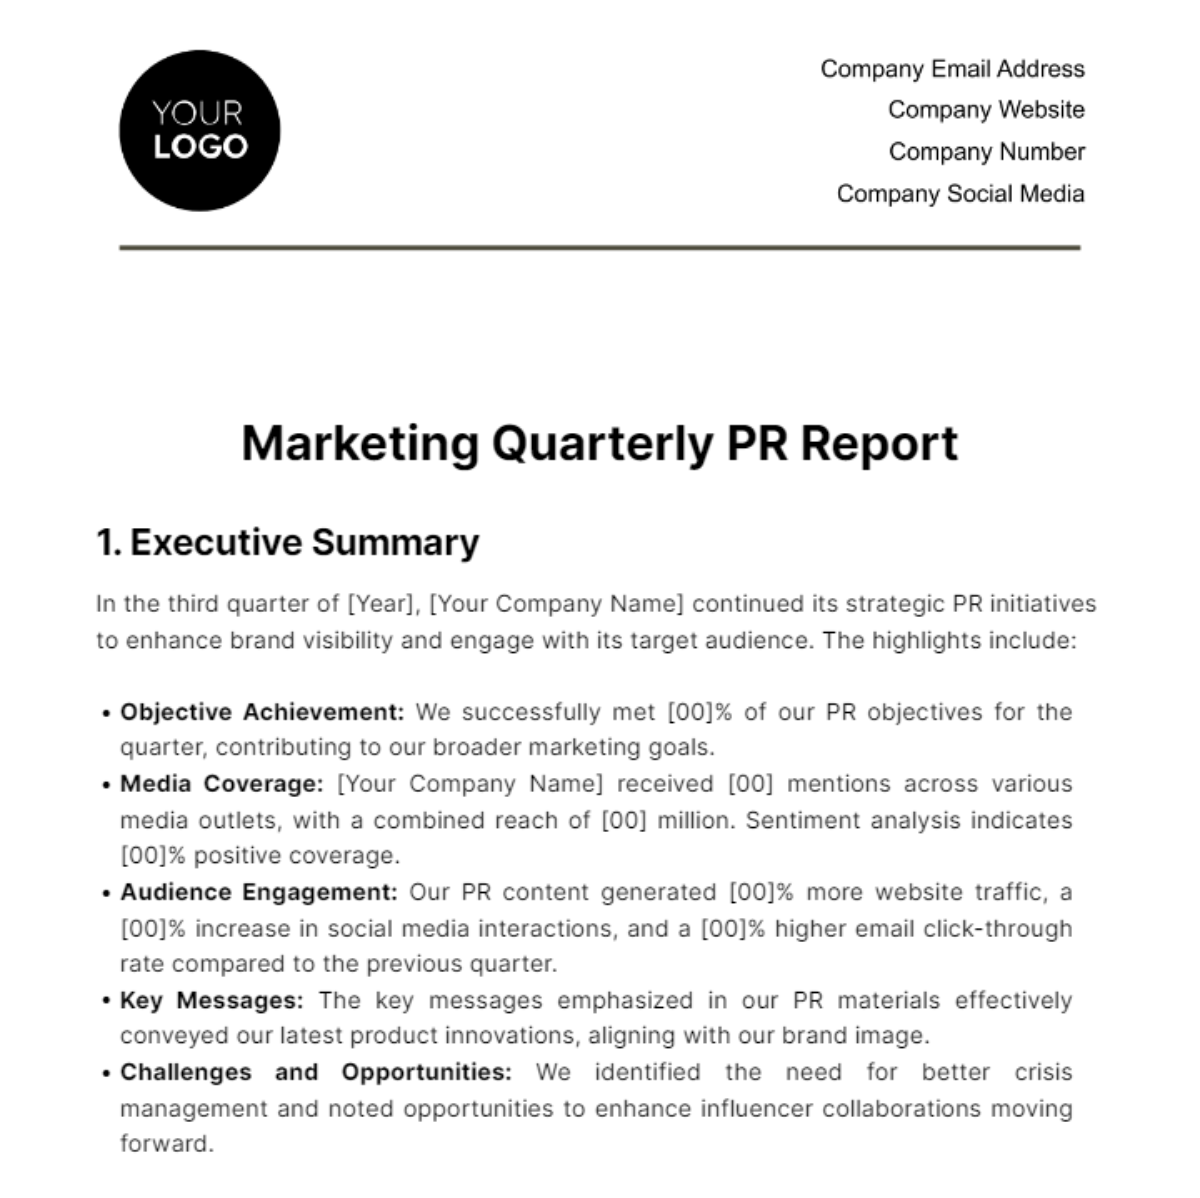 Marketing Quarterly PR Report Template